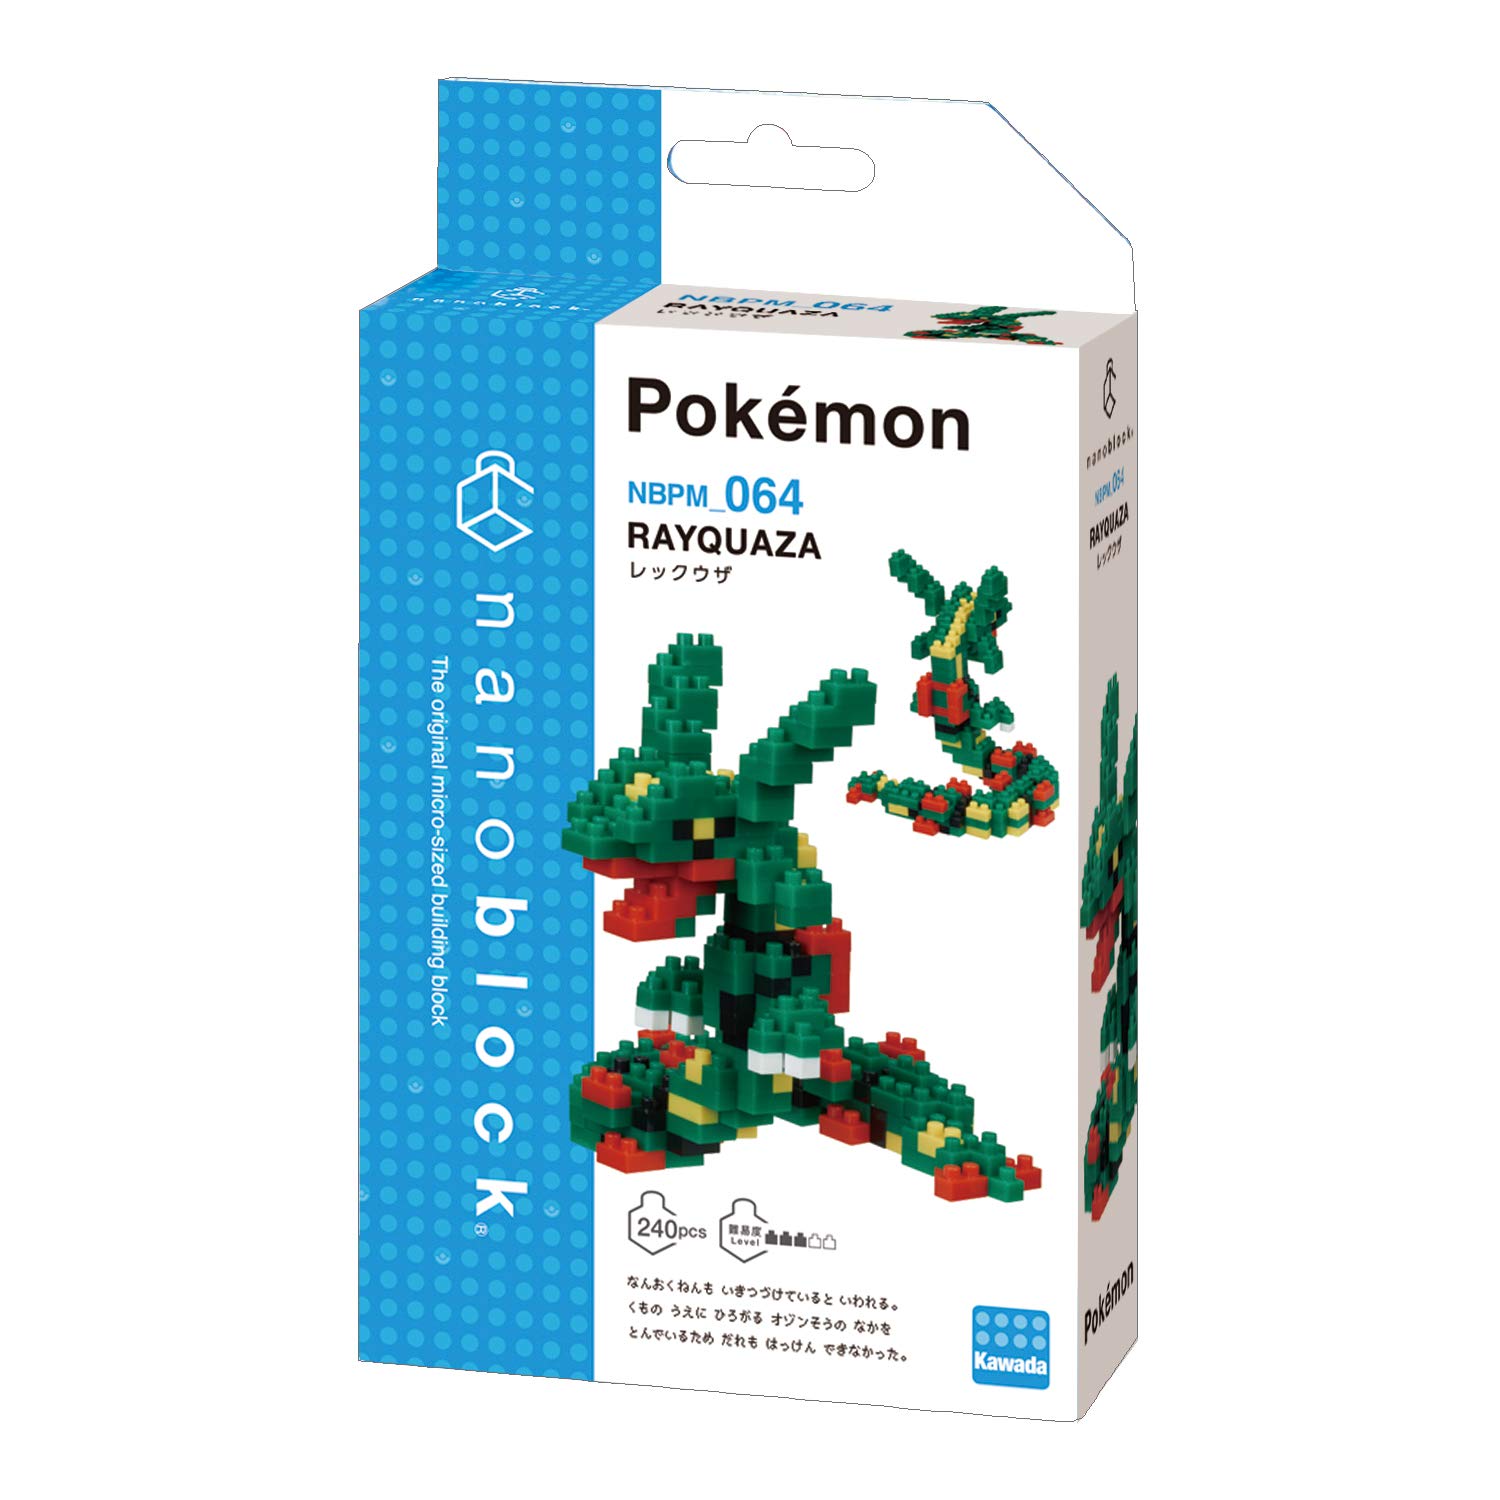 nanoblock - Rayquaza [Pokémon], Pokémon Series Building Kit, 240 pieces